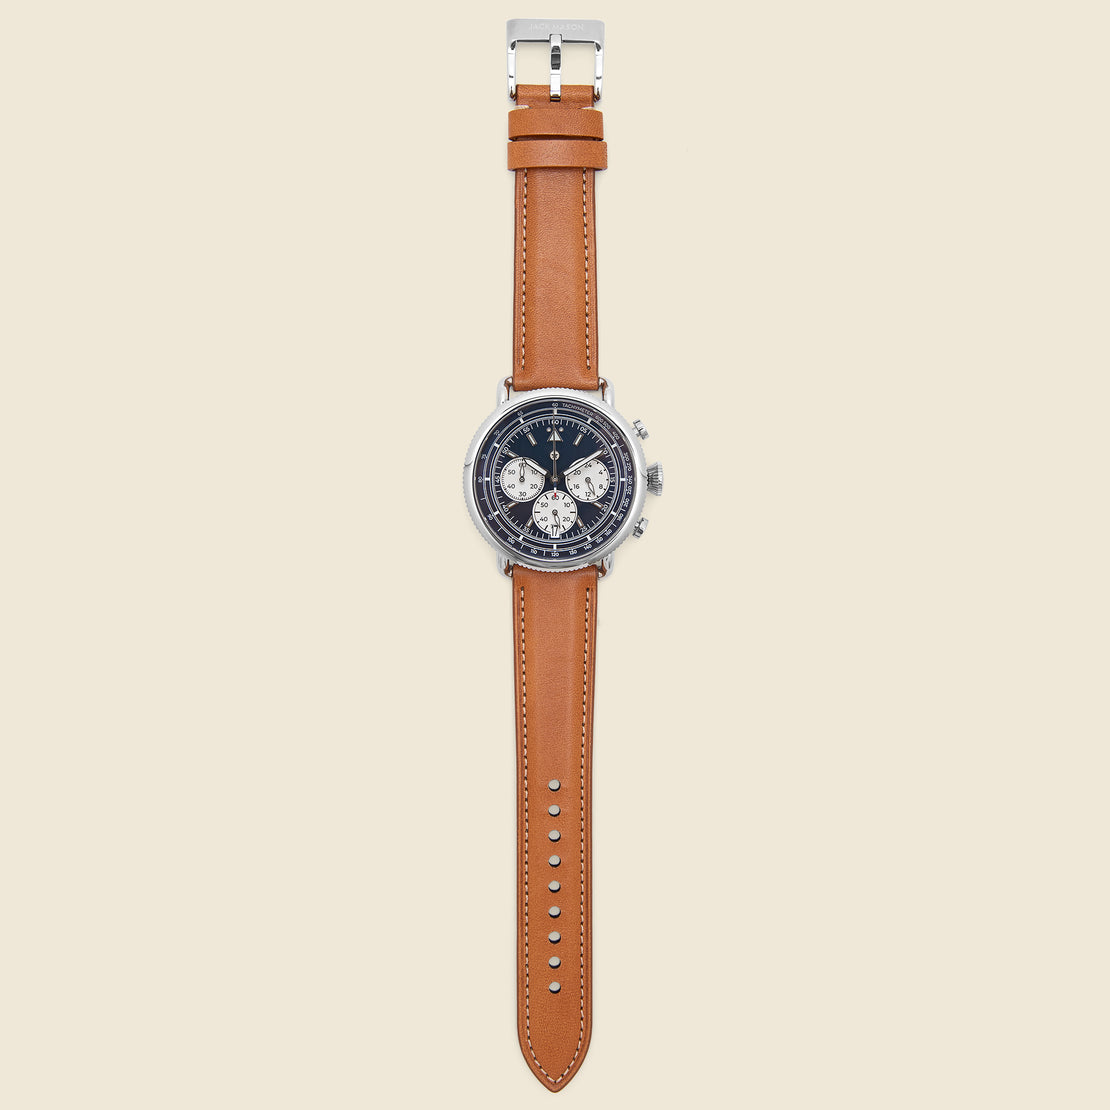 Avigator Meca-Quartz Chronograph Watch - Navy/Brown/White